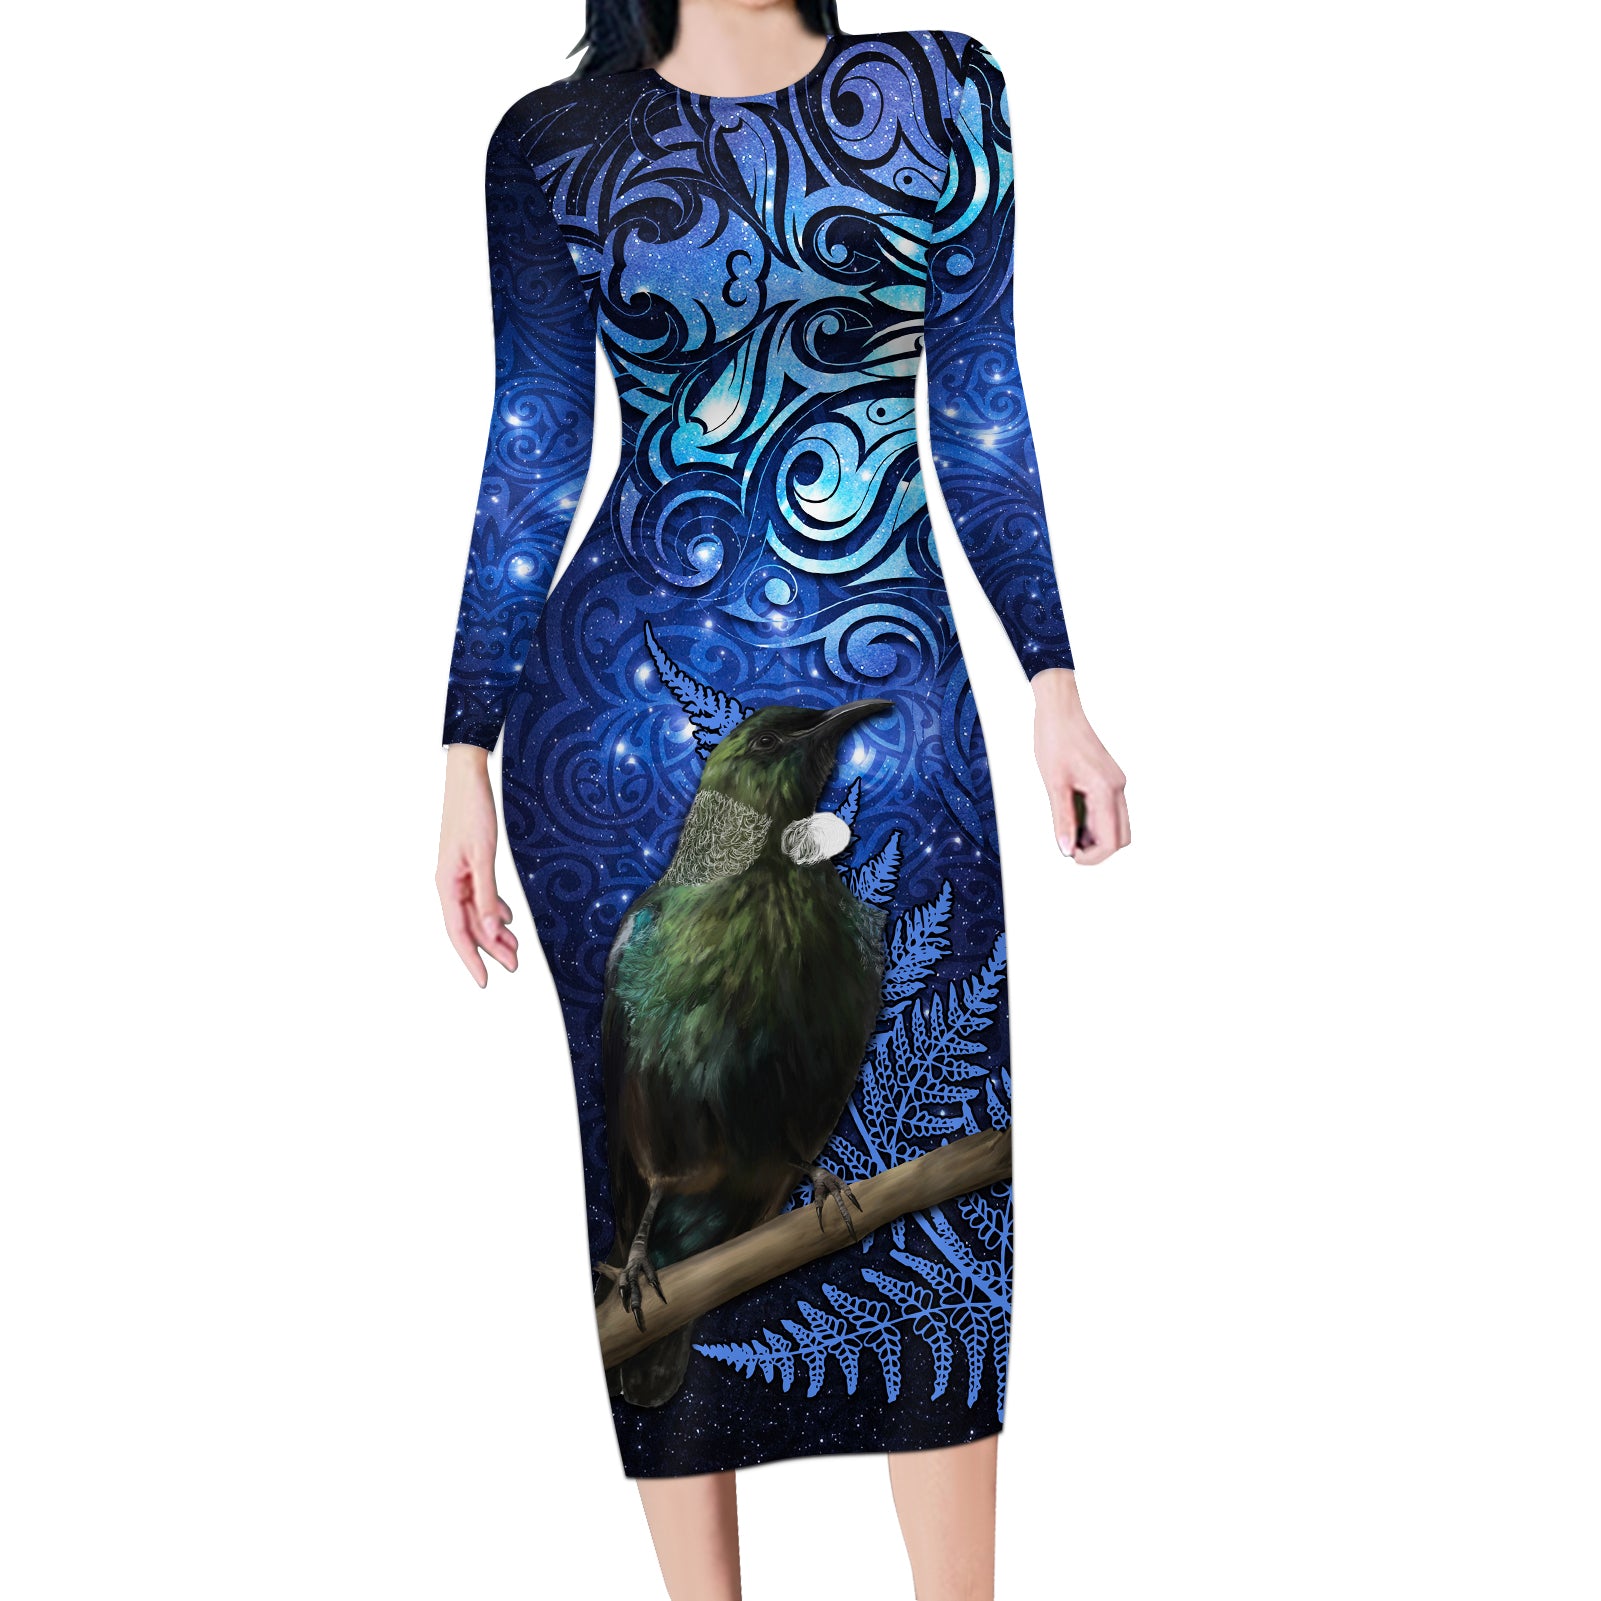 New Zealand Tui Bird Matariki Long Sleeve Bodycon Dress Maori New Year with Galaxy Fern